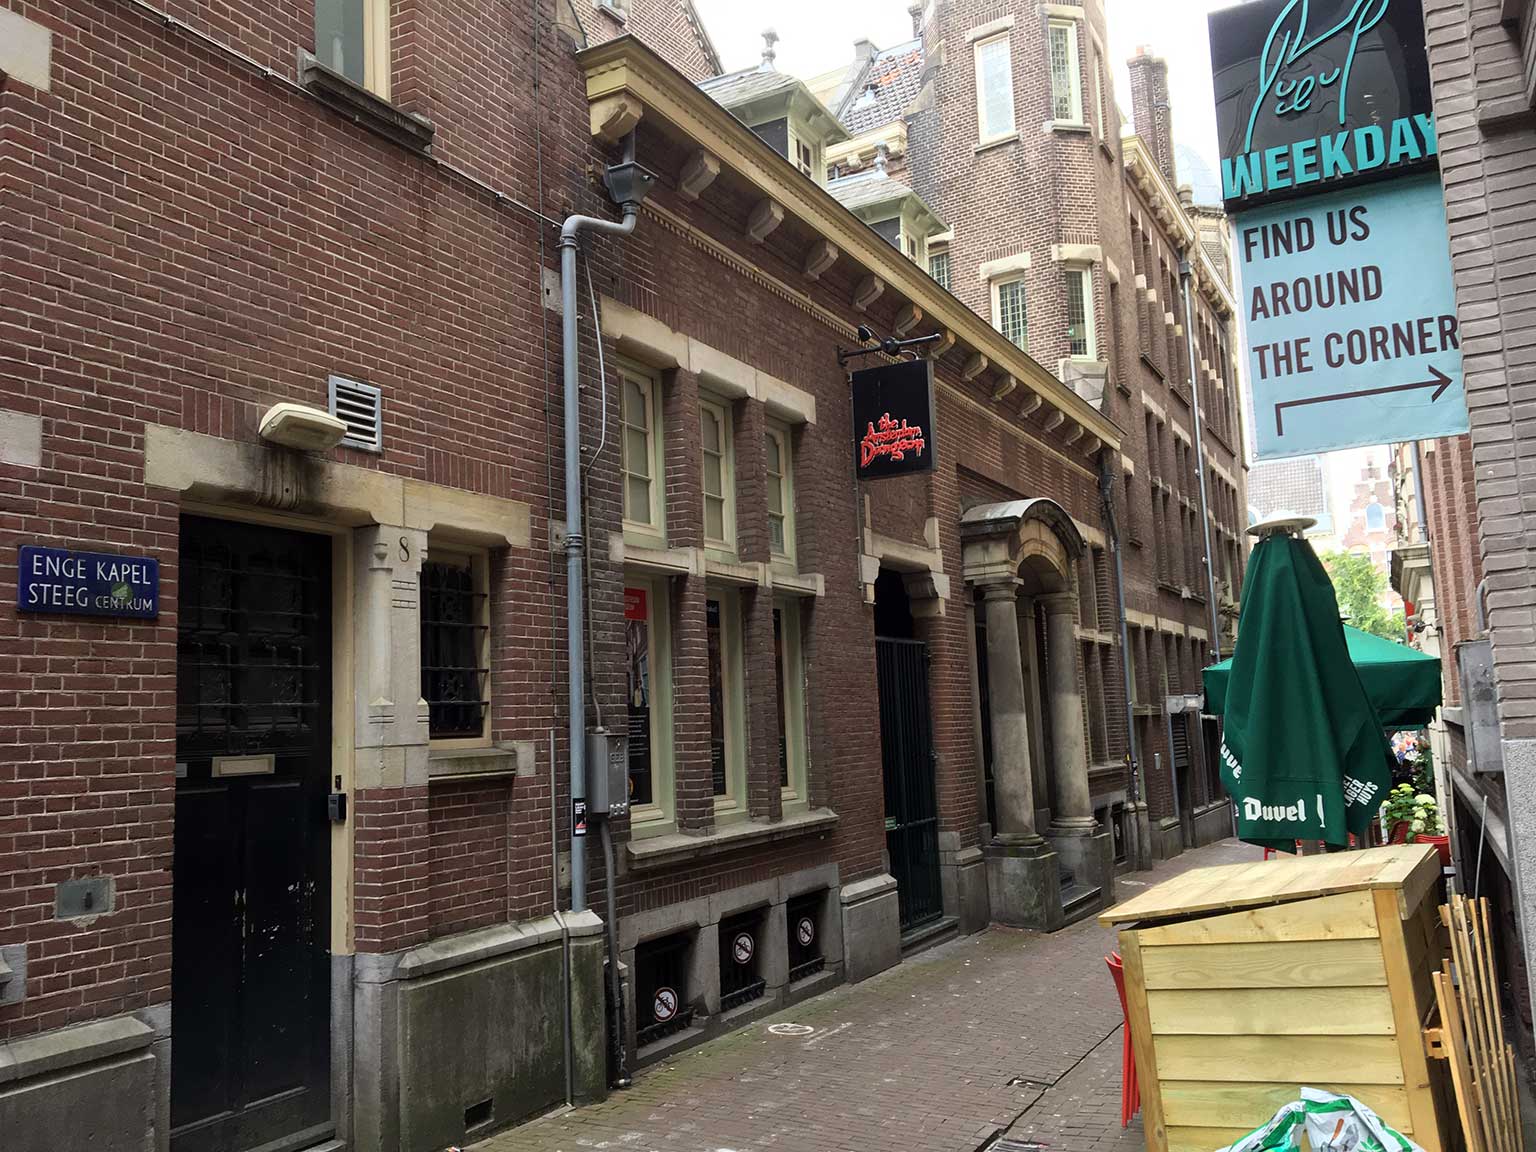 Side entrance on Enge Kapelsteeg, Amsterdam, once the main entrance of the Holy Stead Chapel